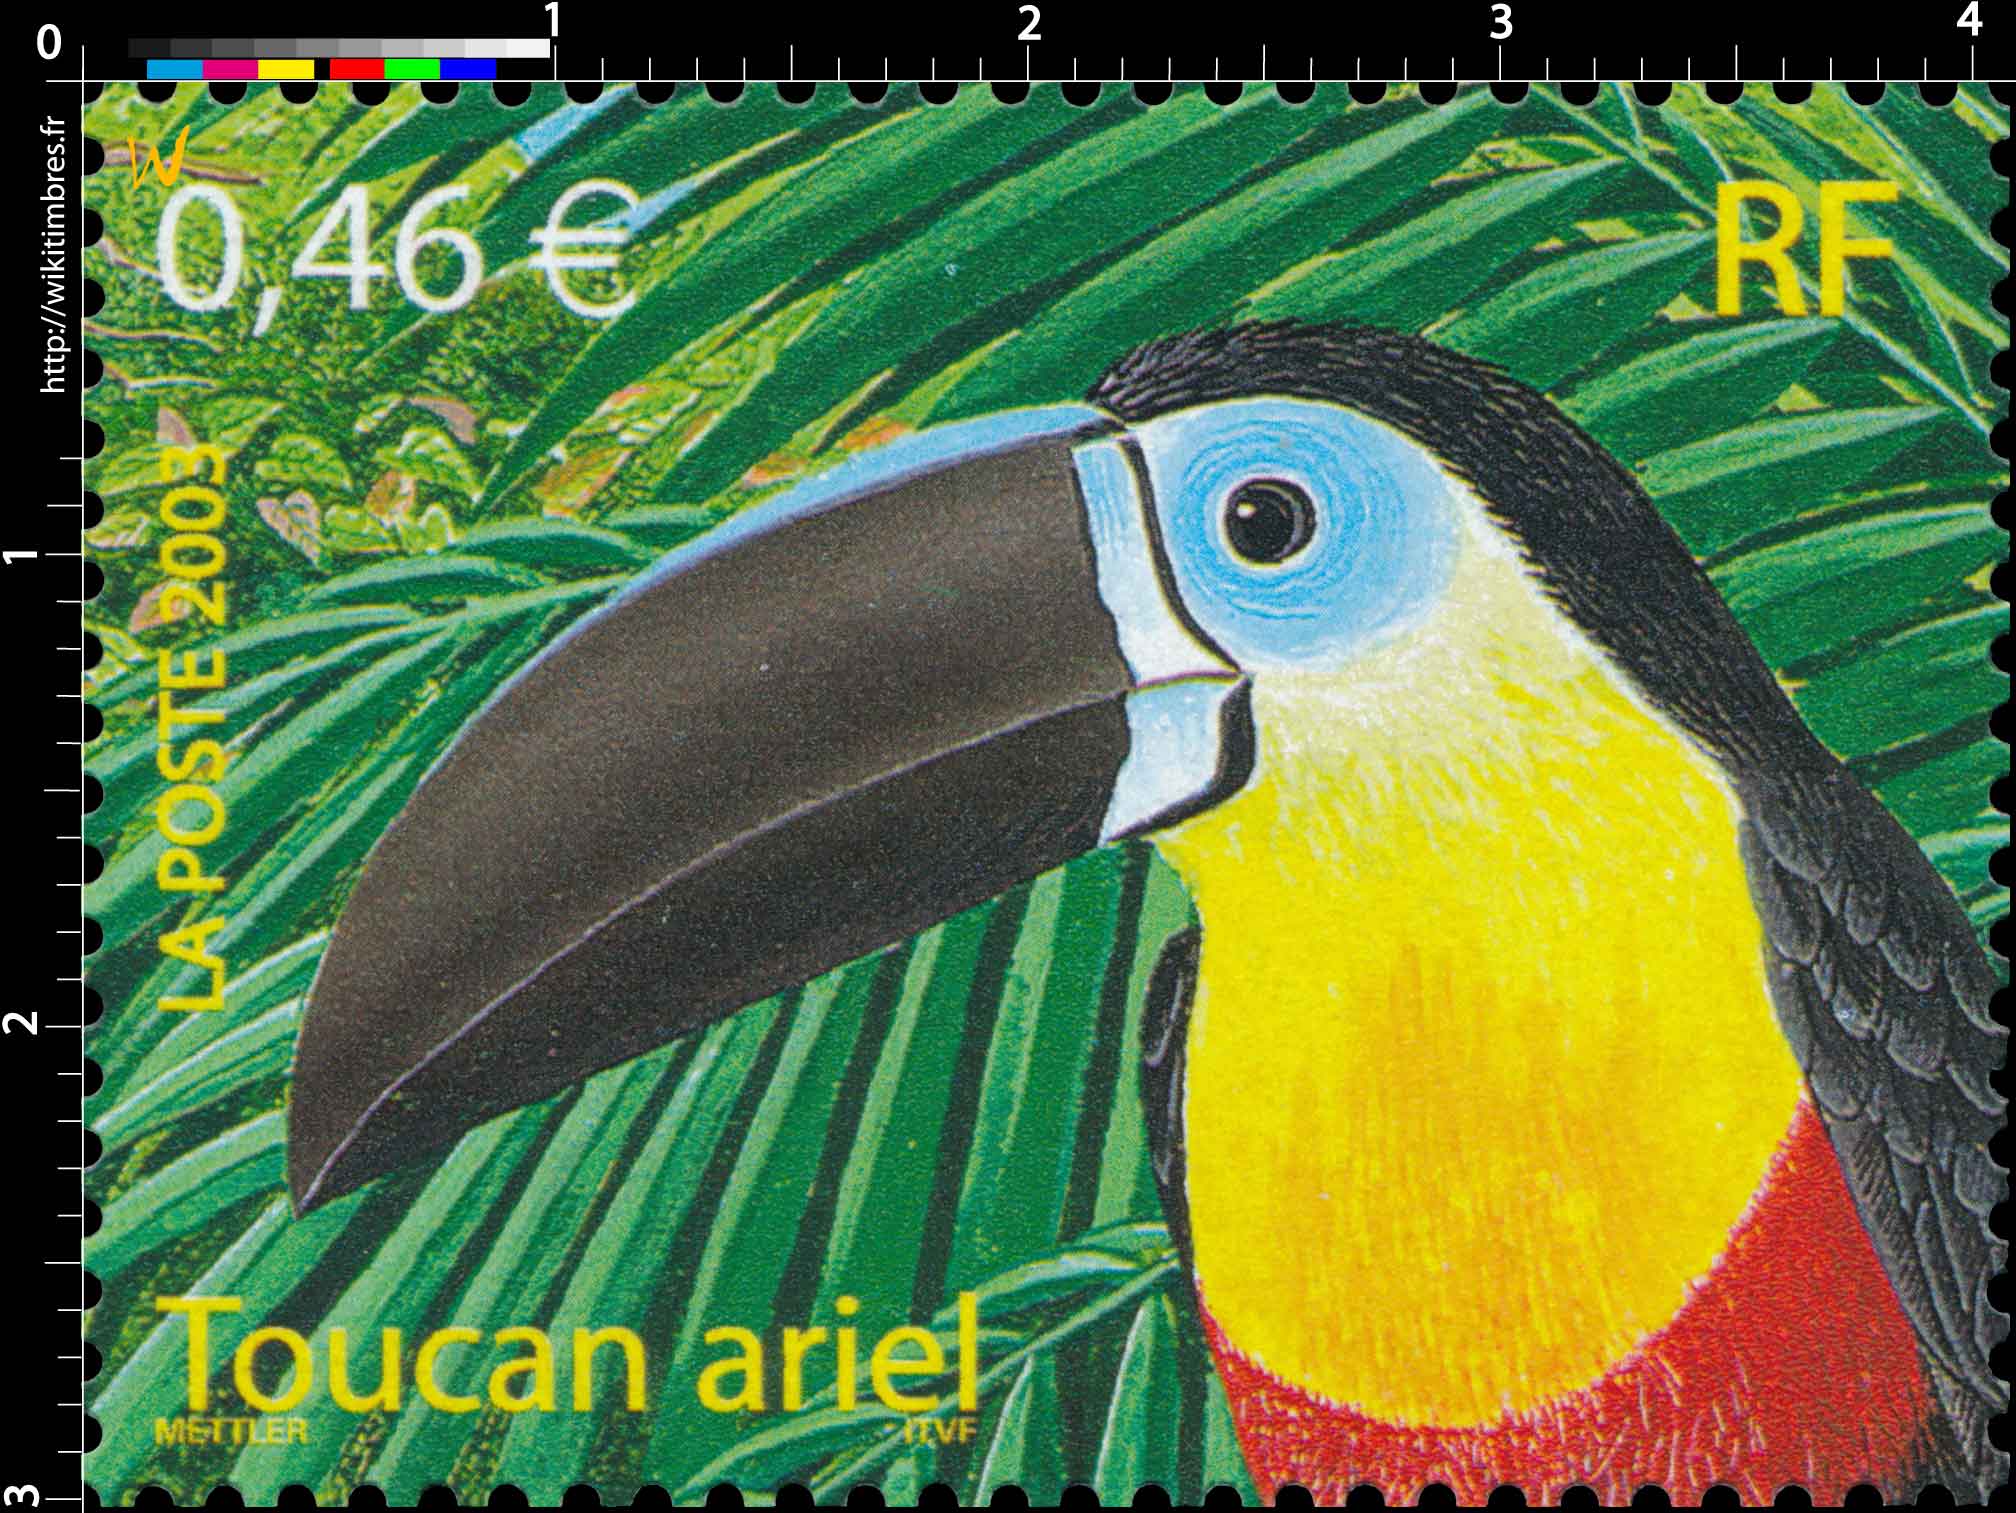 2003 Toucan ariel